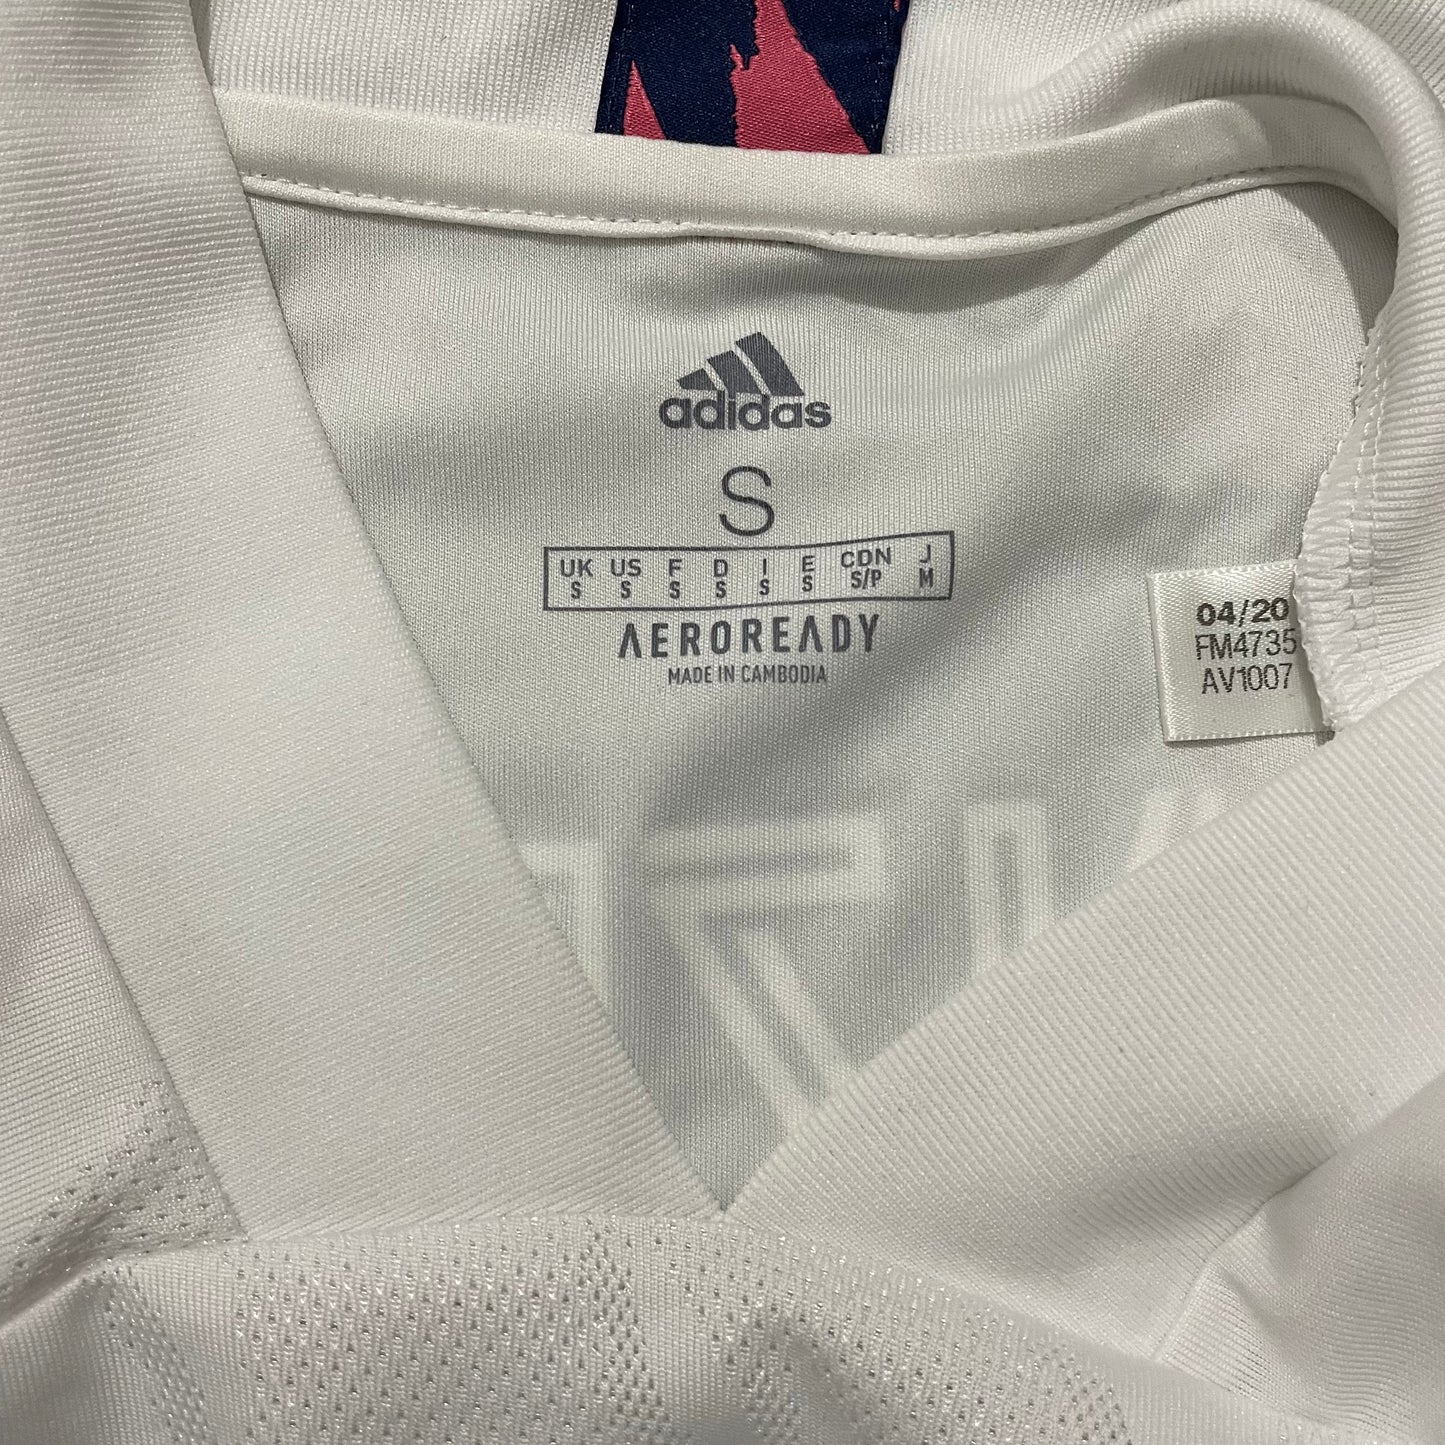 2020-2021 Real Madrid CF home shirt #9 Benzema (S)